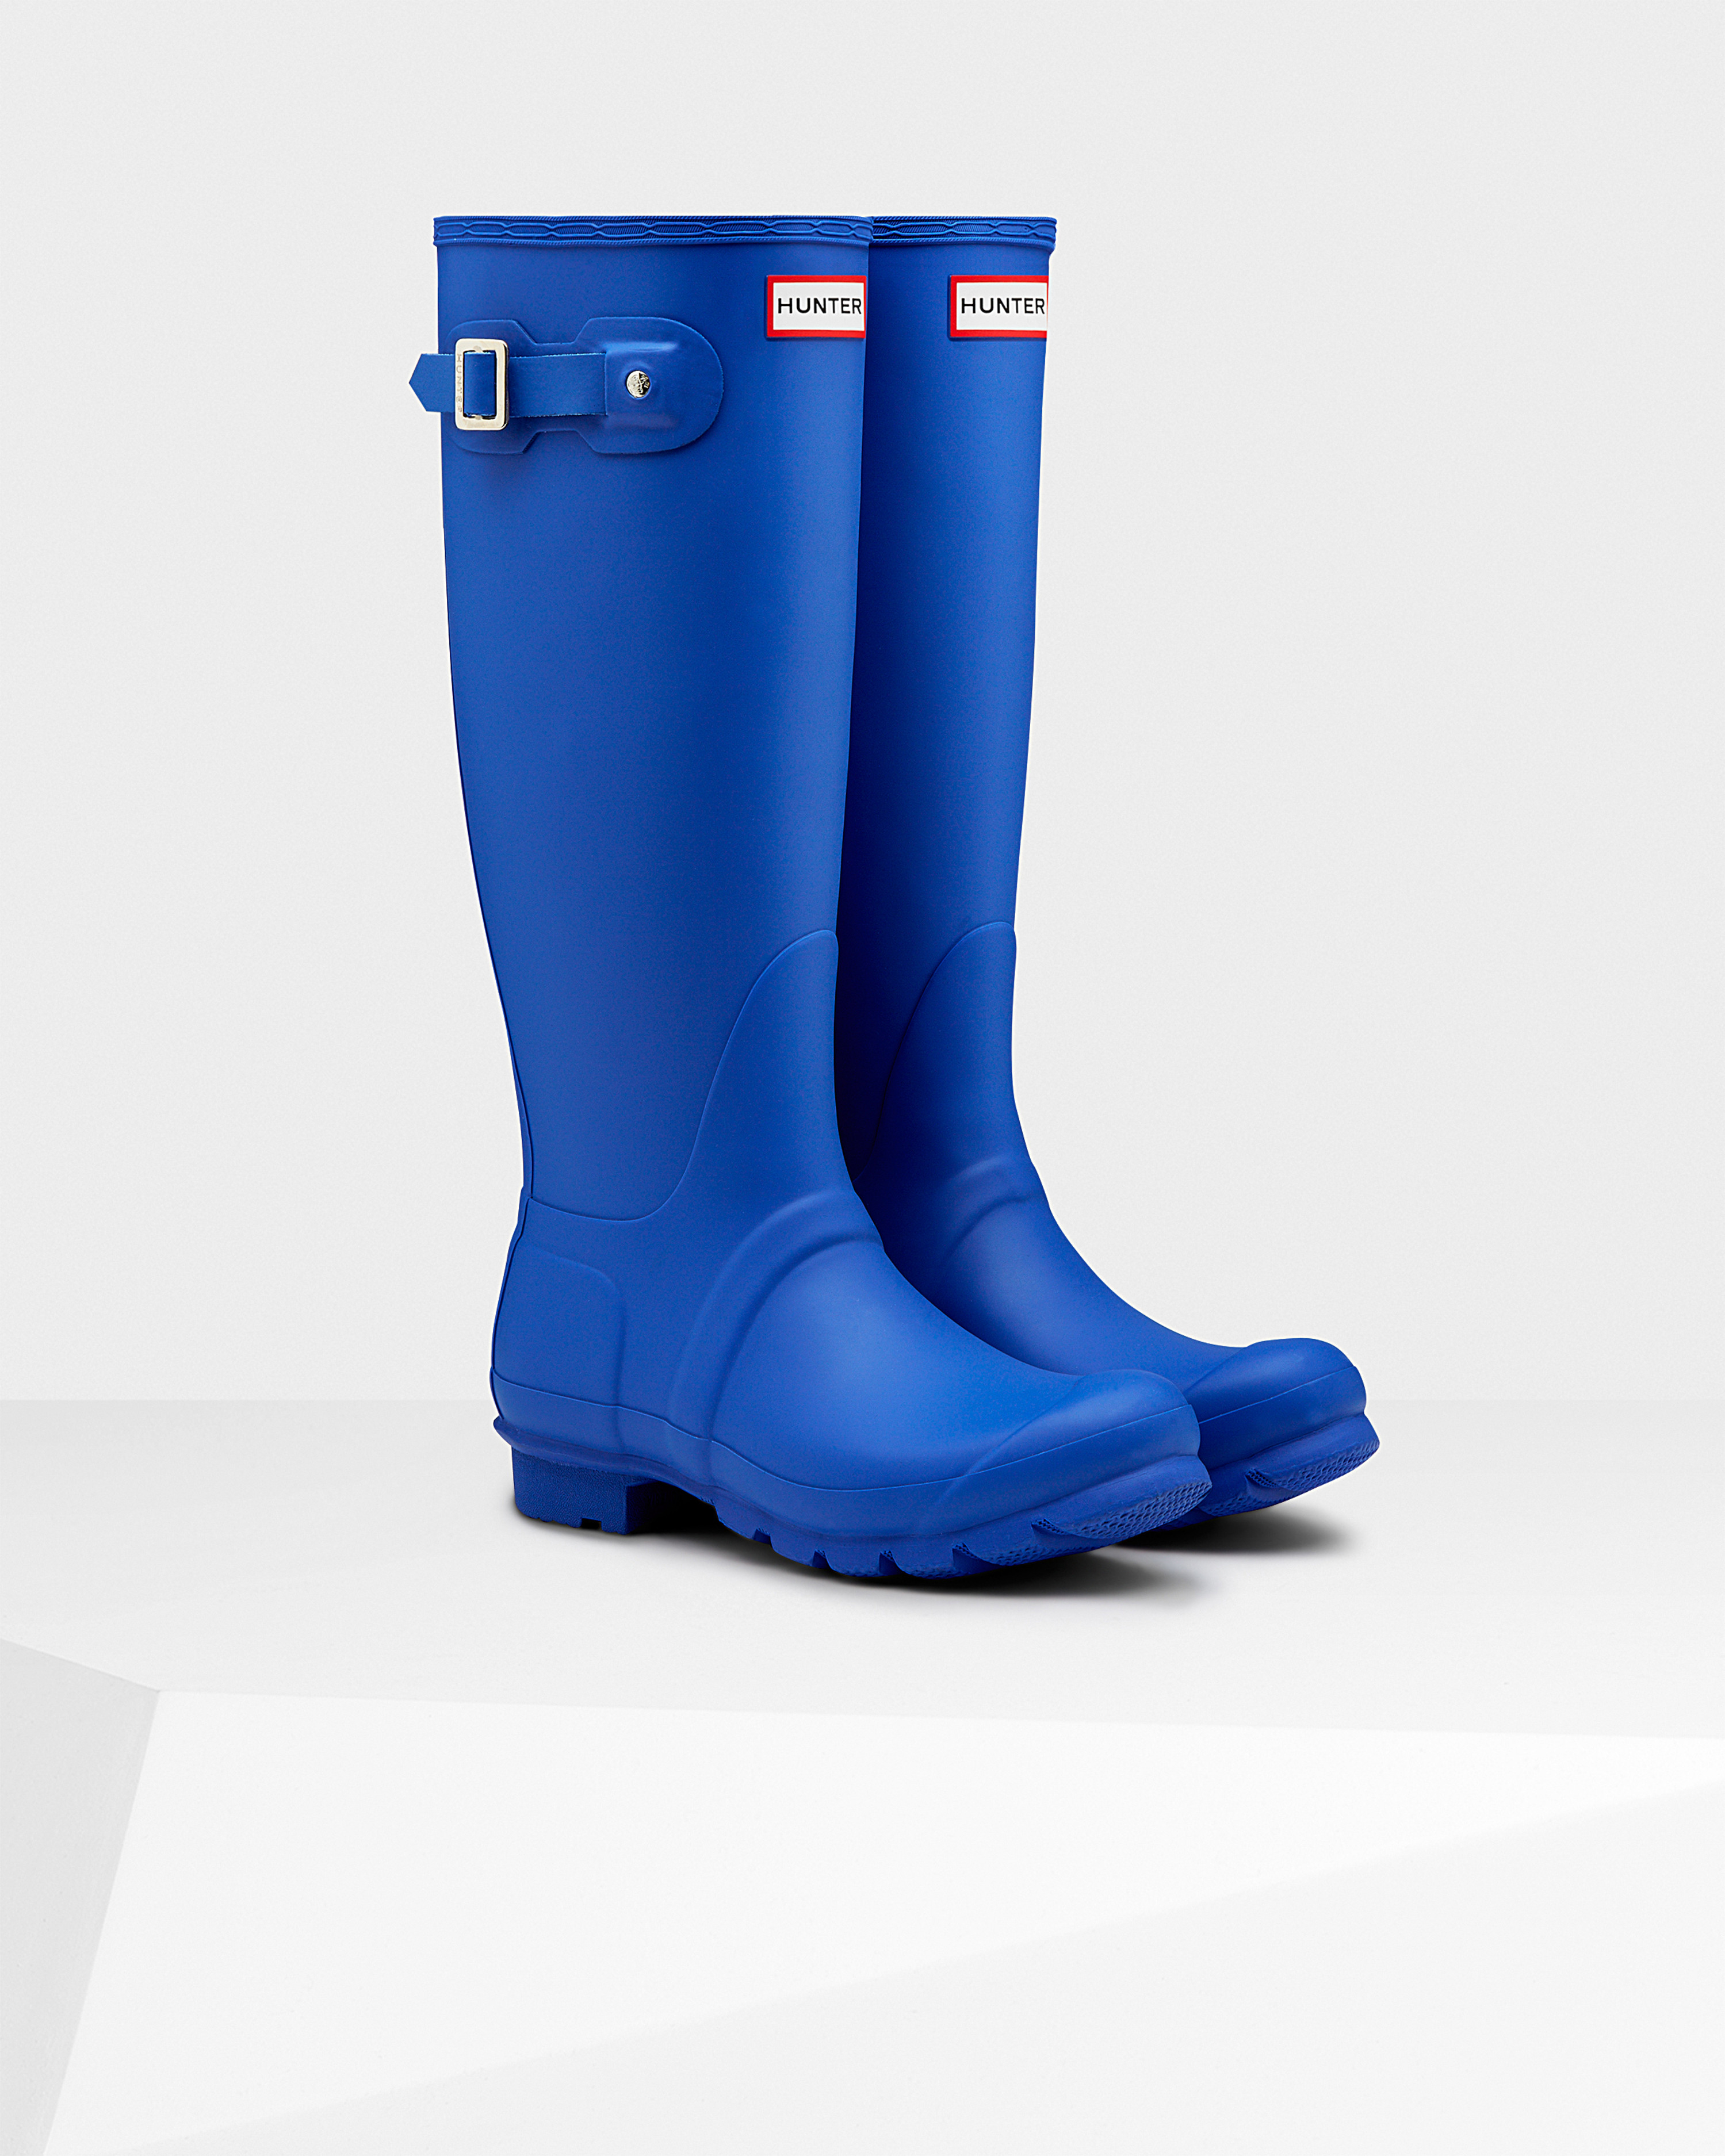 HUNTER Women's Original Tall Rain Boots in Bright Cobalt (Blue) - Lyst